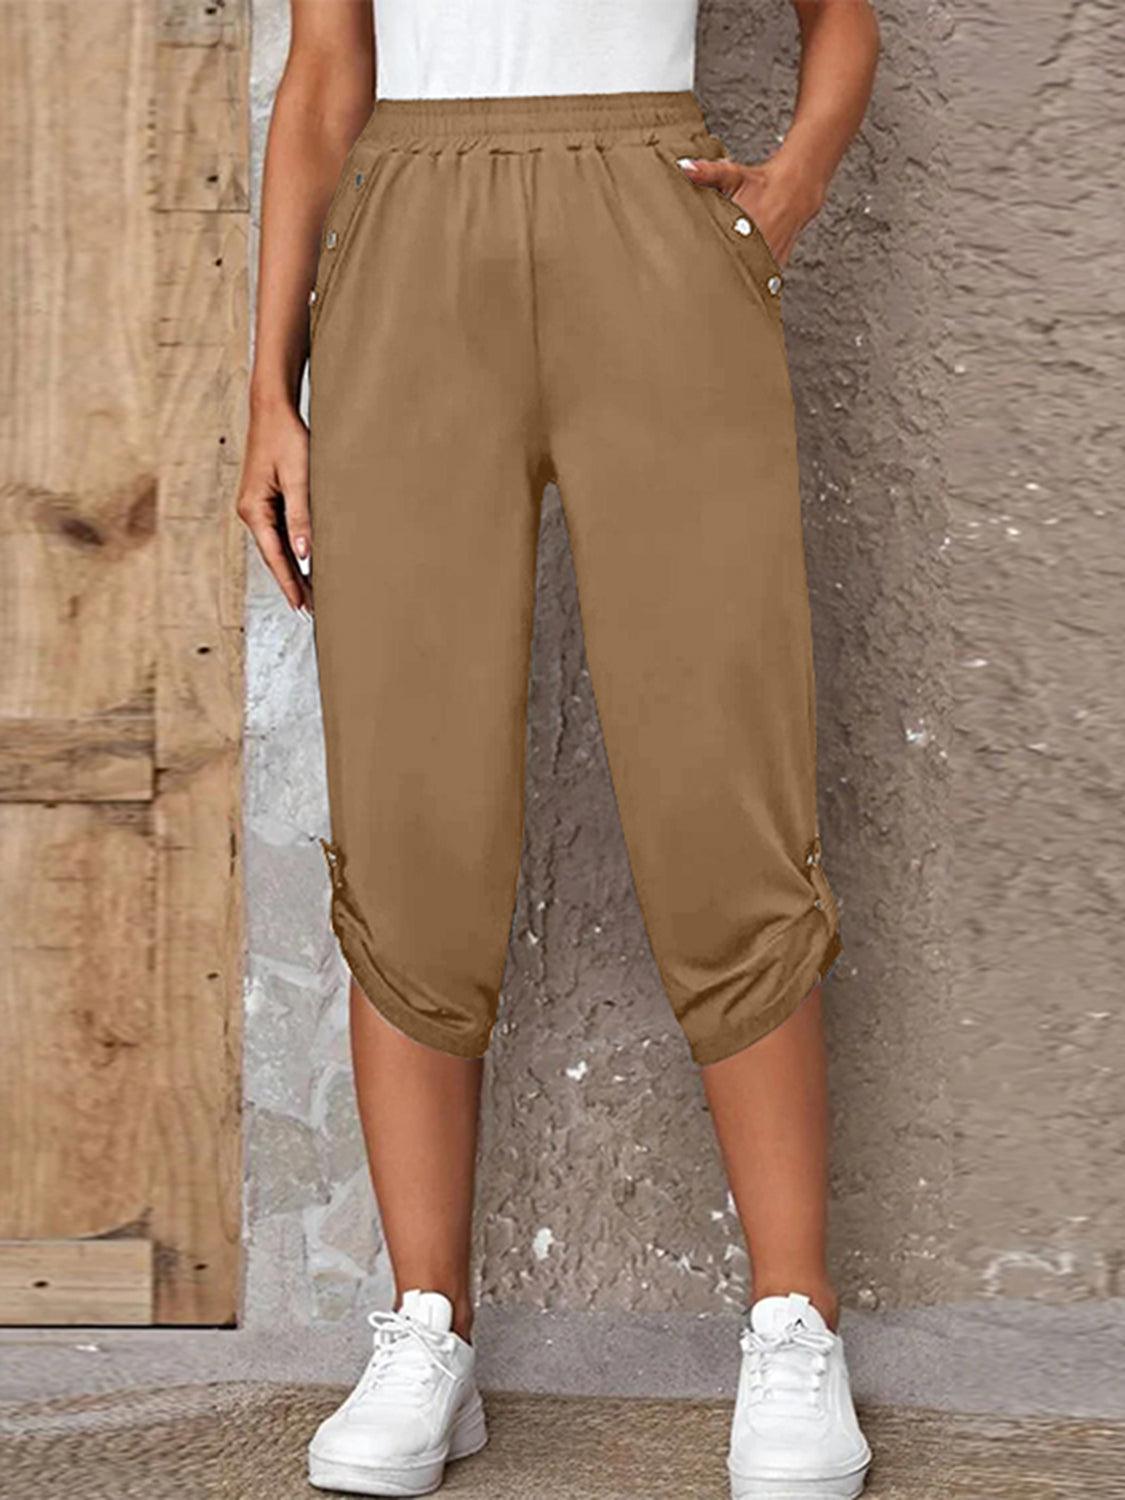 Bona Fide Fashion - Full Size Roll-Tab Capris Pants - Women Fashion - Bona Fide Fashion